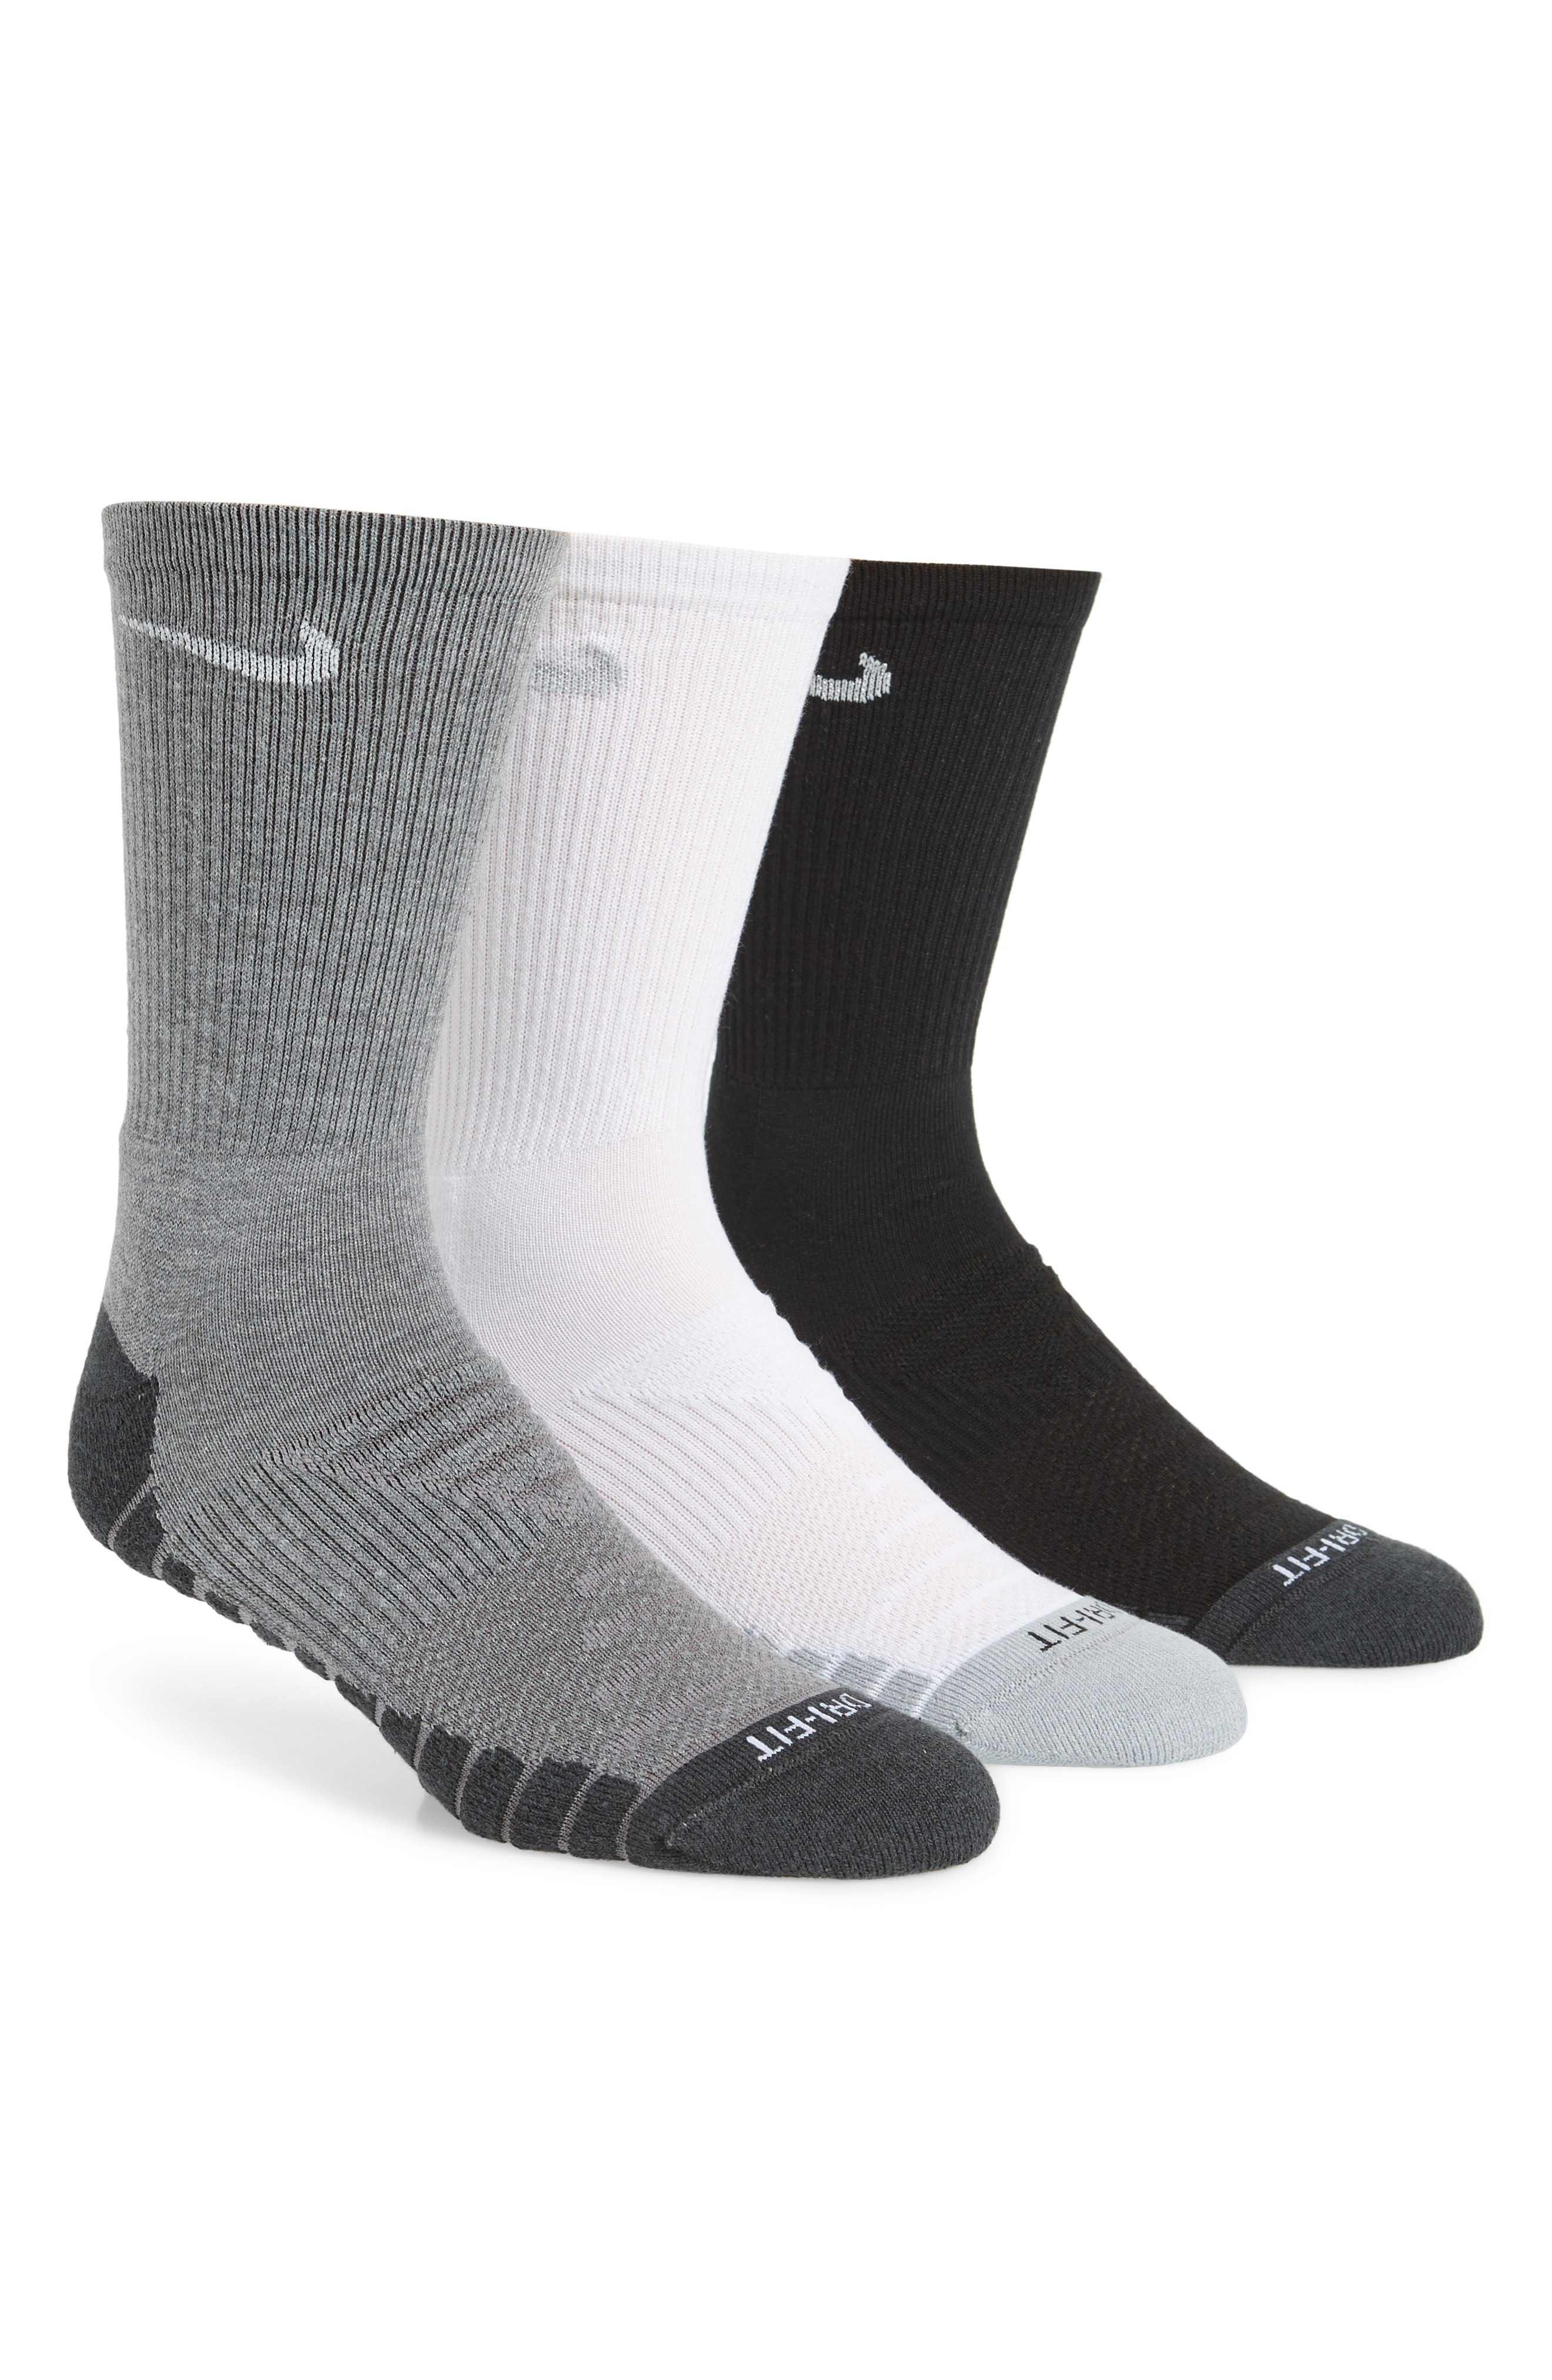 white nike crew socks with grey swoosh